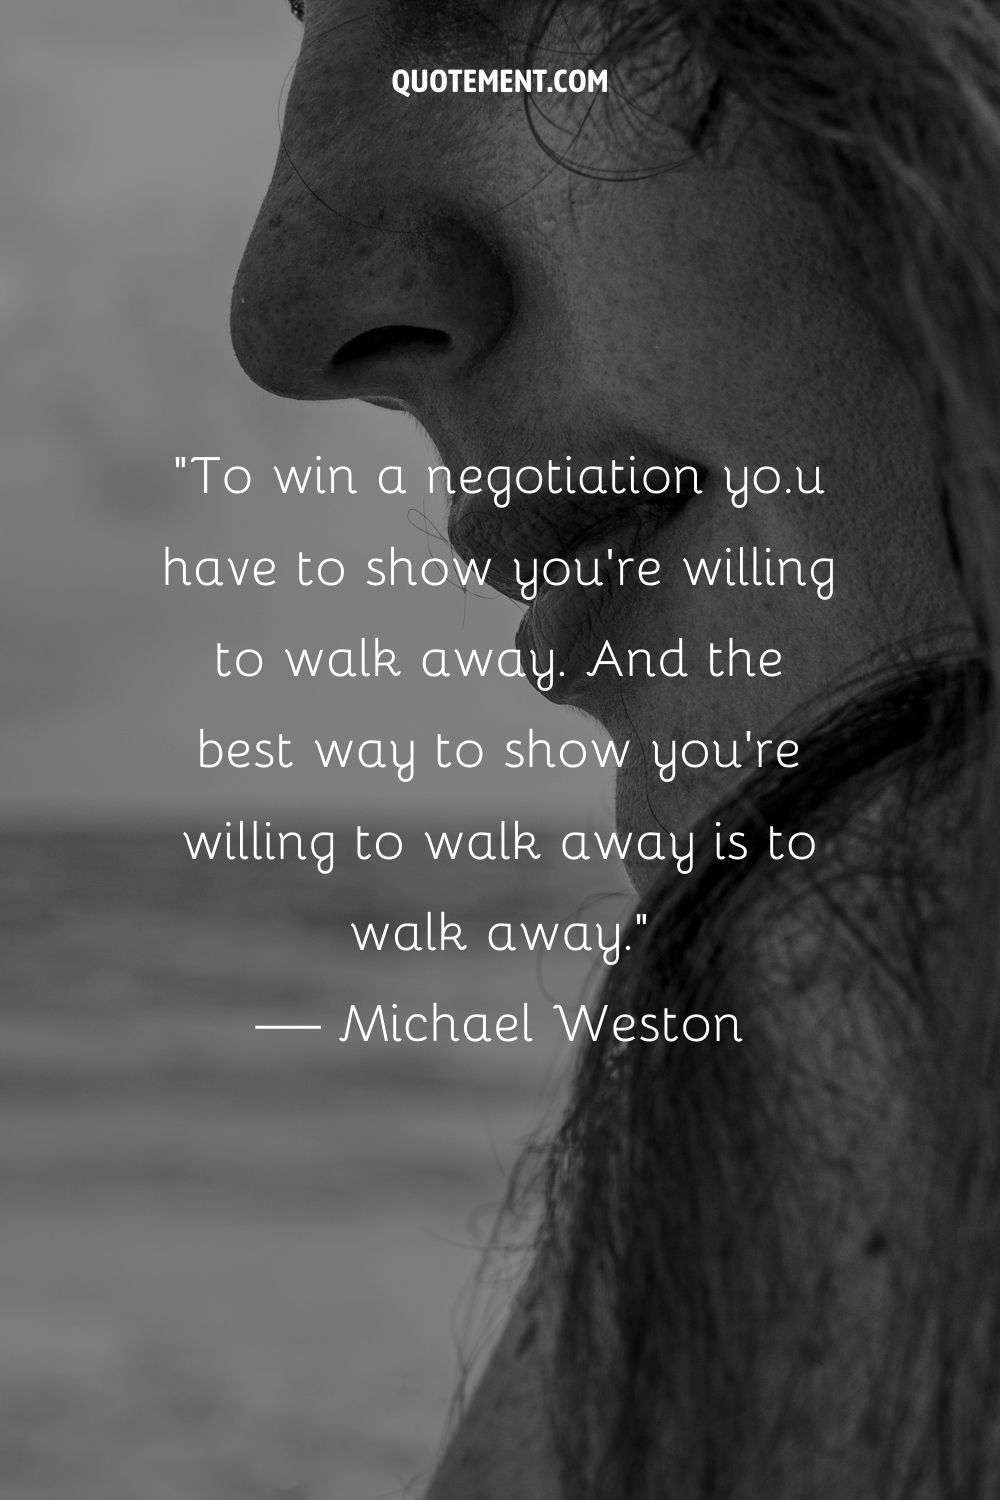 Woman's profile, Weston's negotiation wisdom representing walk away from women quote